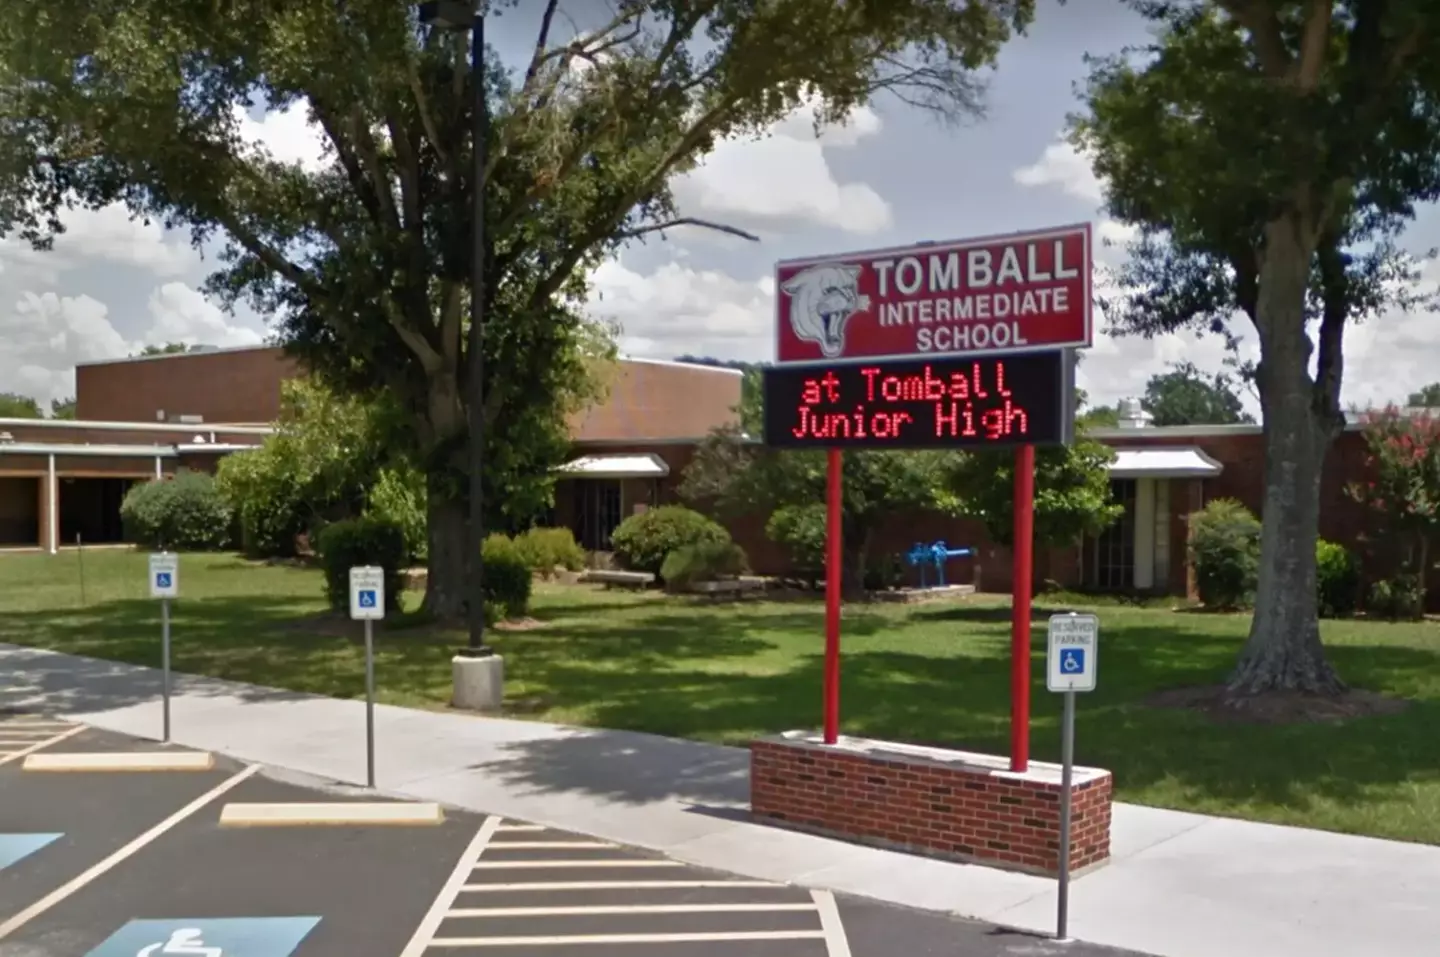 Tomball School in Texas.